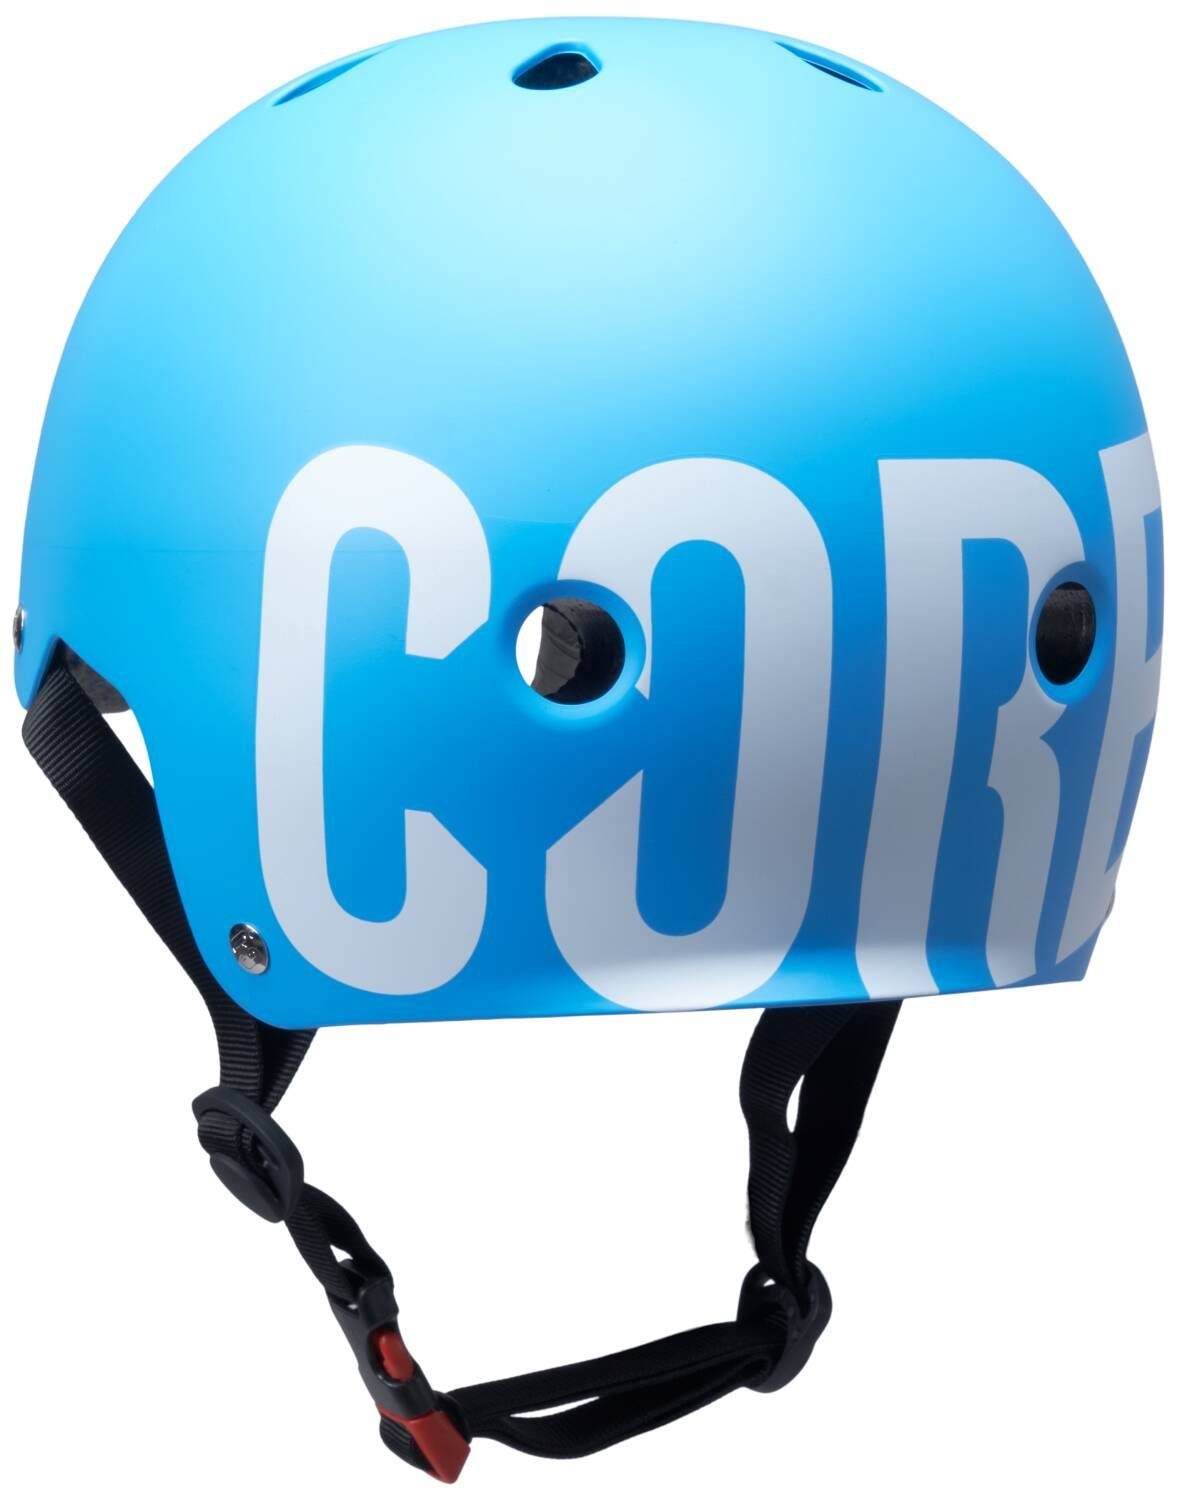 Skate Helm Dirt Core Blau/Logo Core Weiß Stunt-Scooter Action Street Sports Protektoren-Set